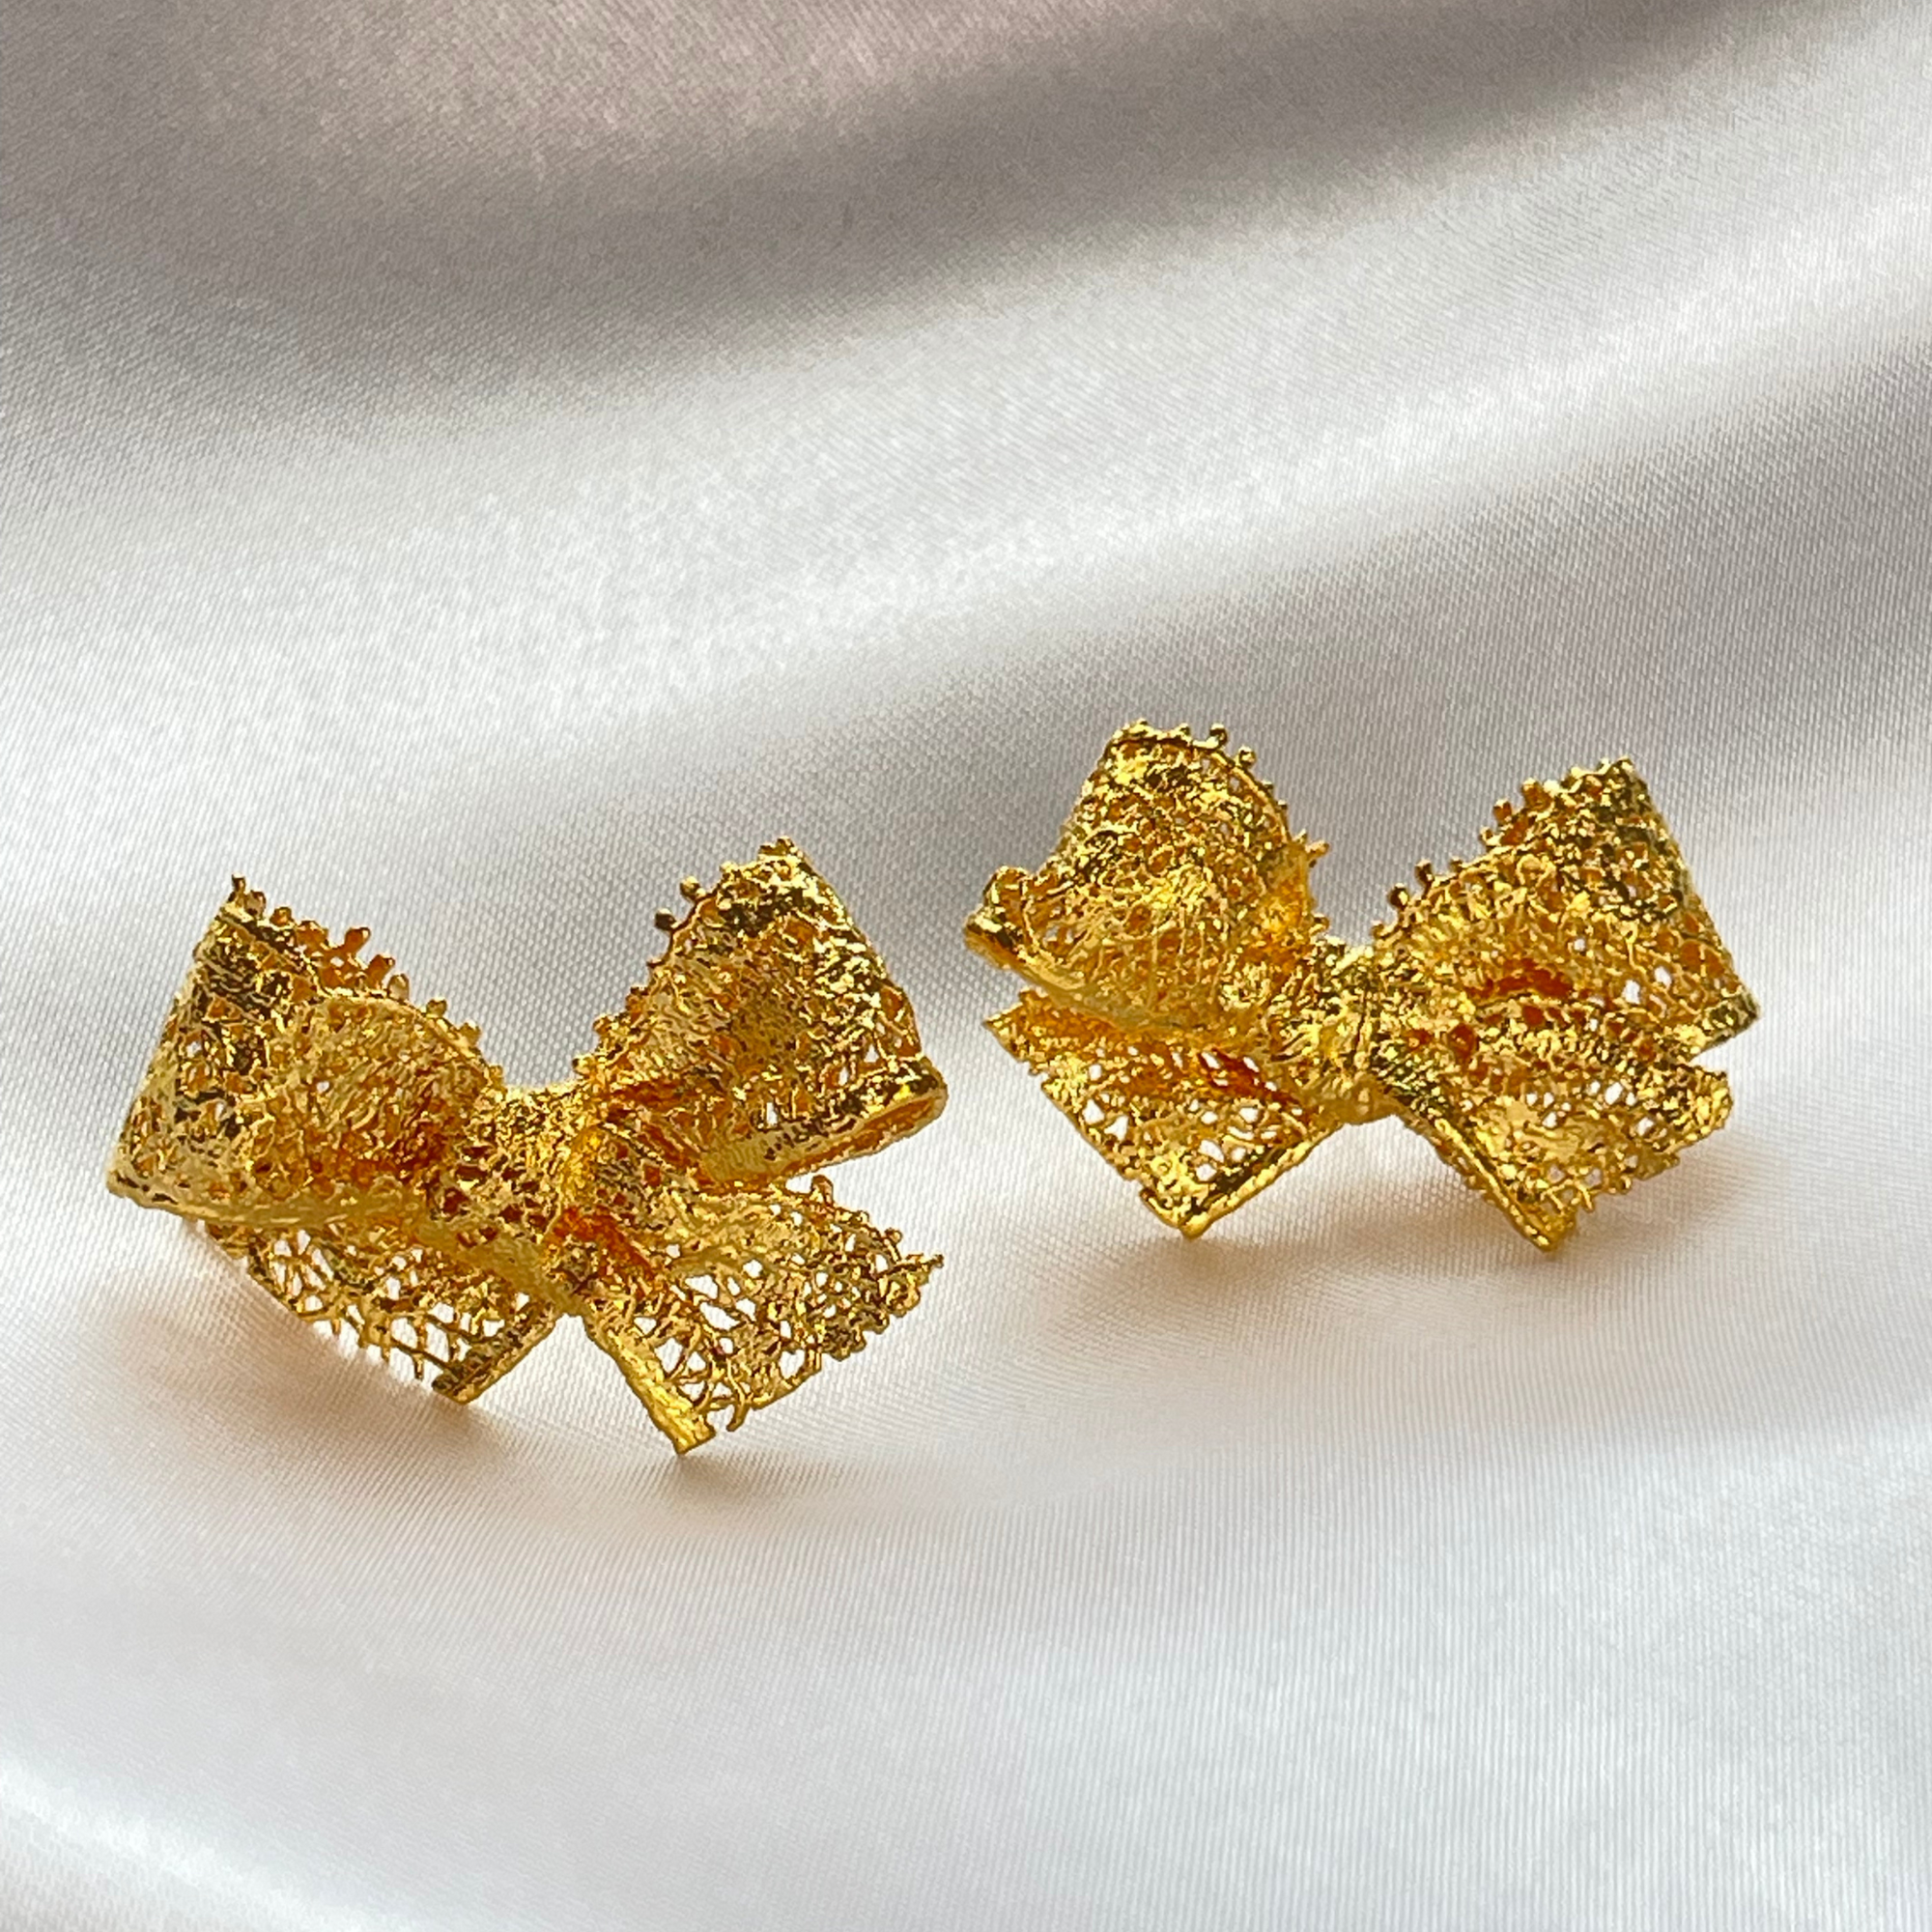 Millie lace bow stud earrings in 24k gold.